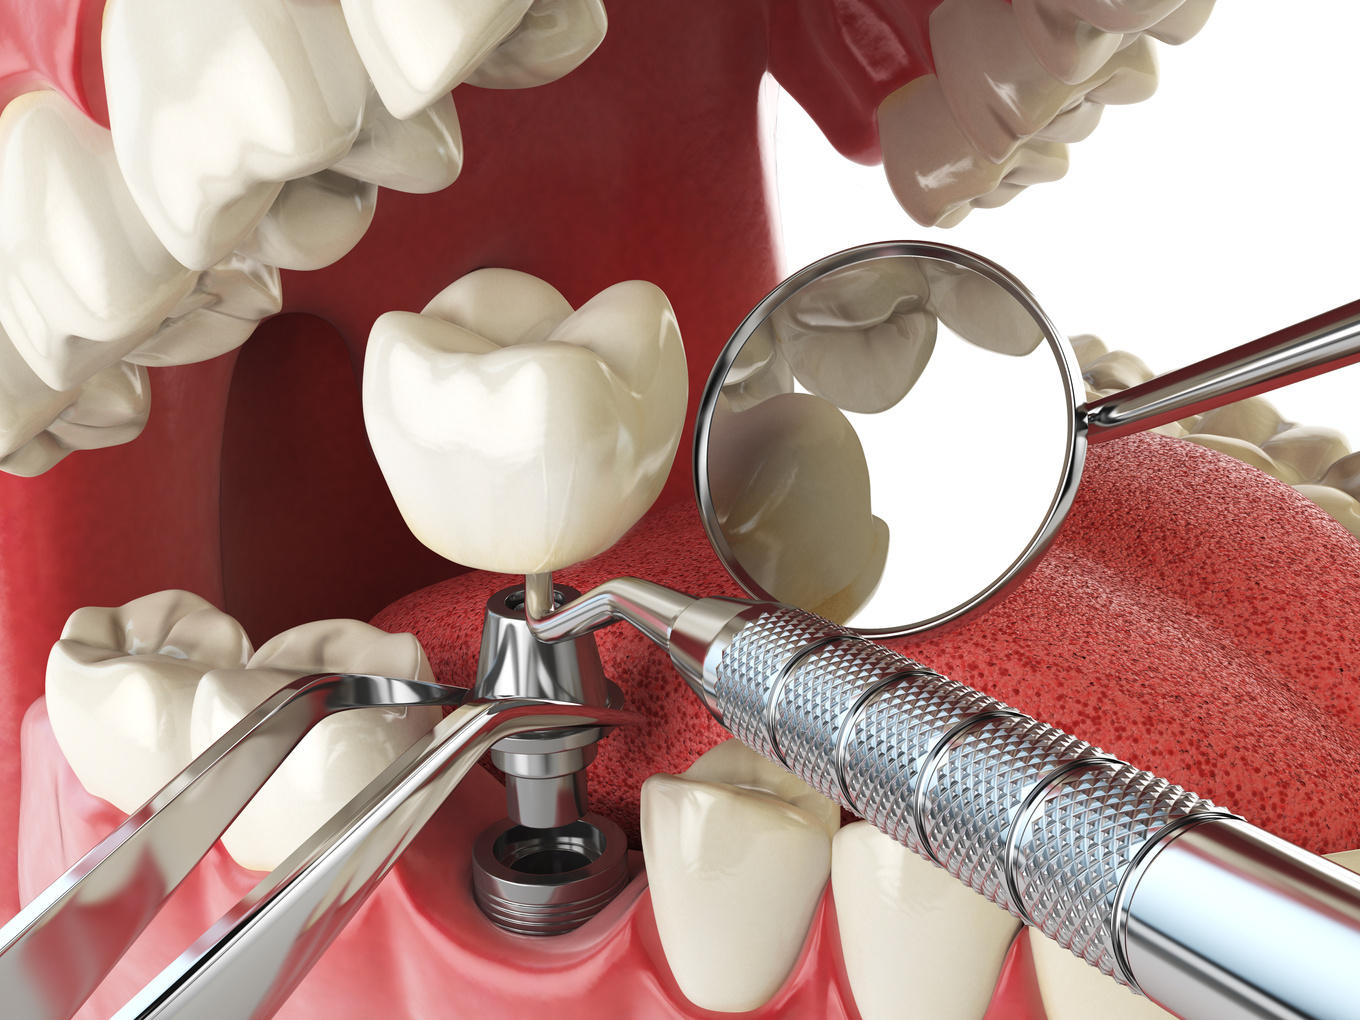 Tooth human implant. Dental implantation concept. Human teeth or